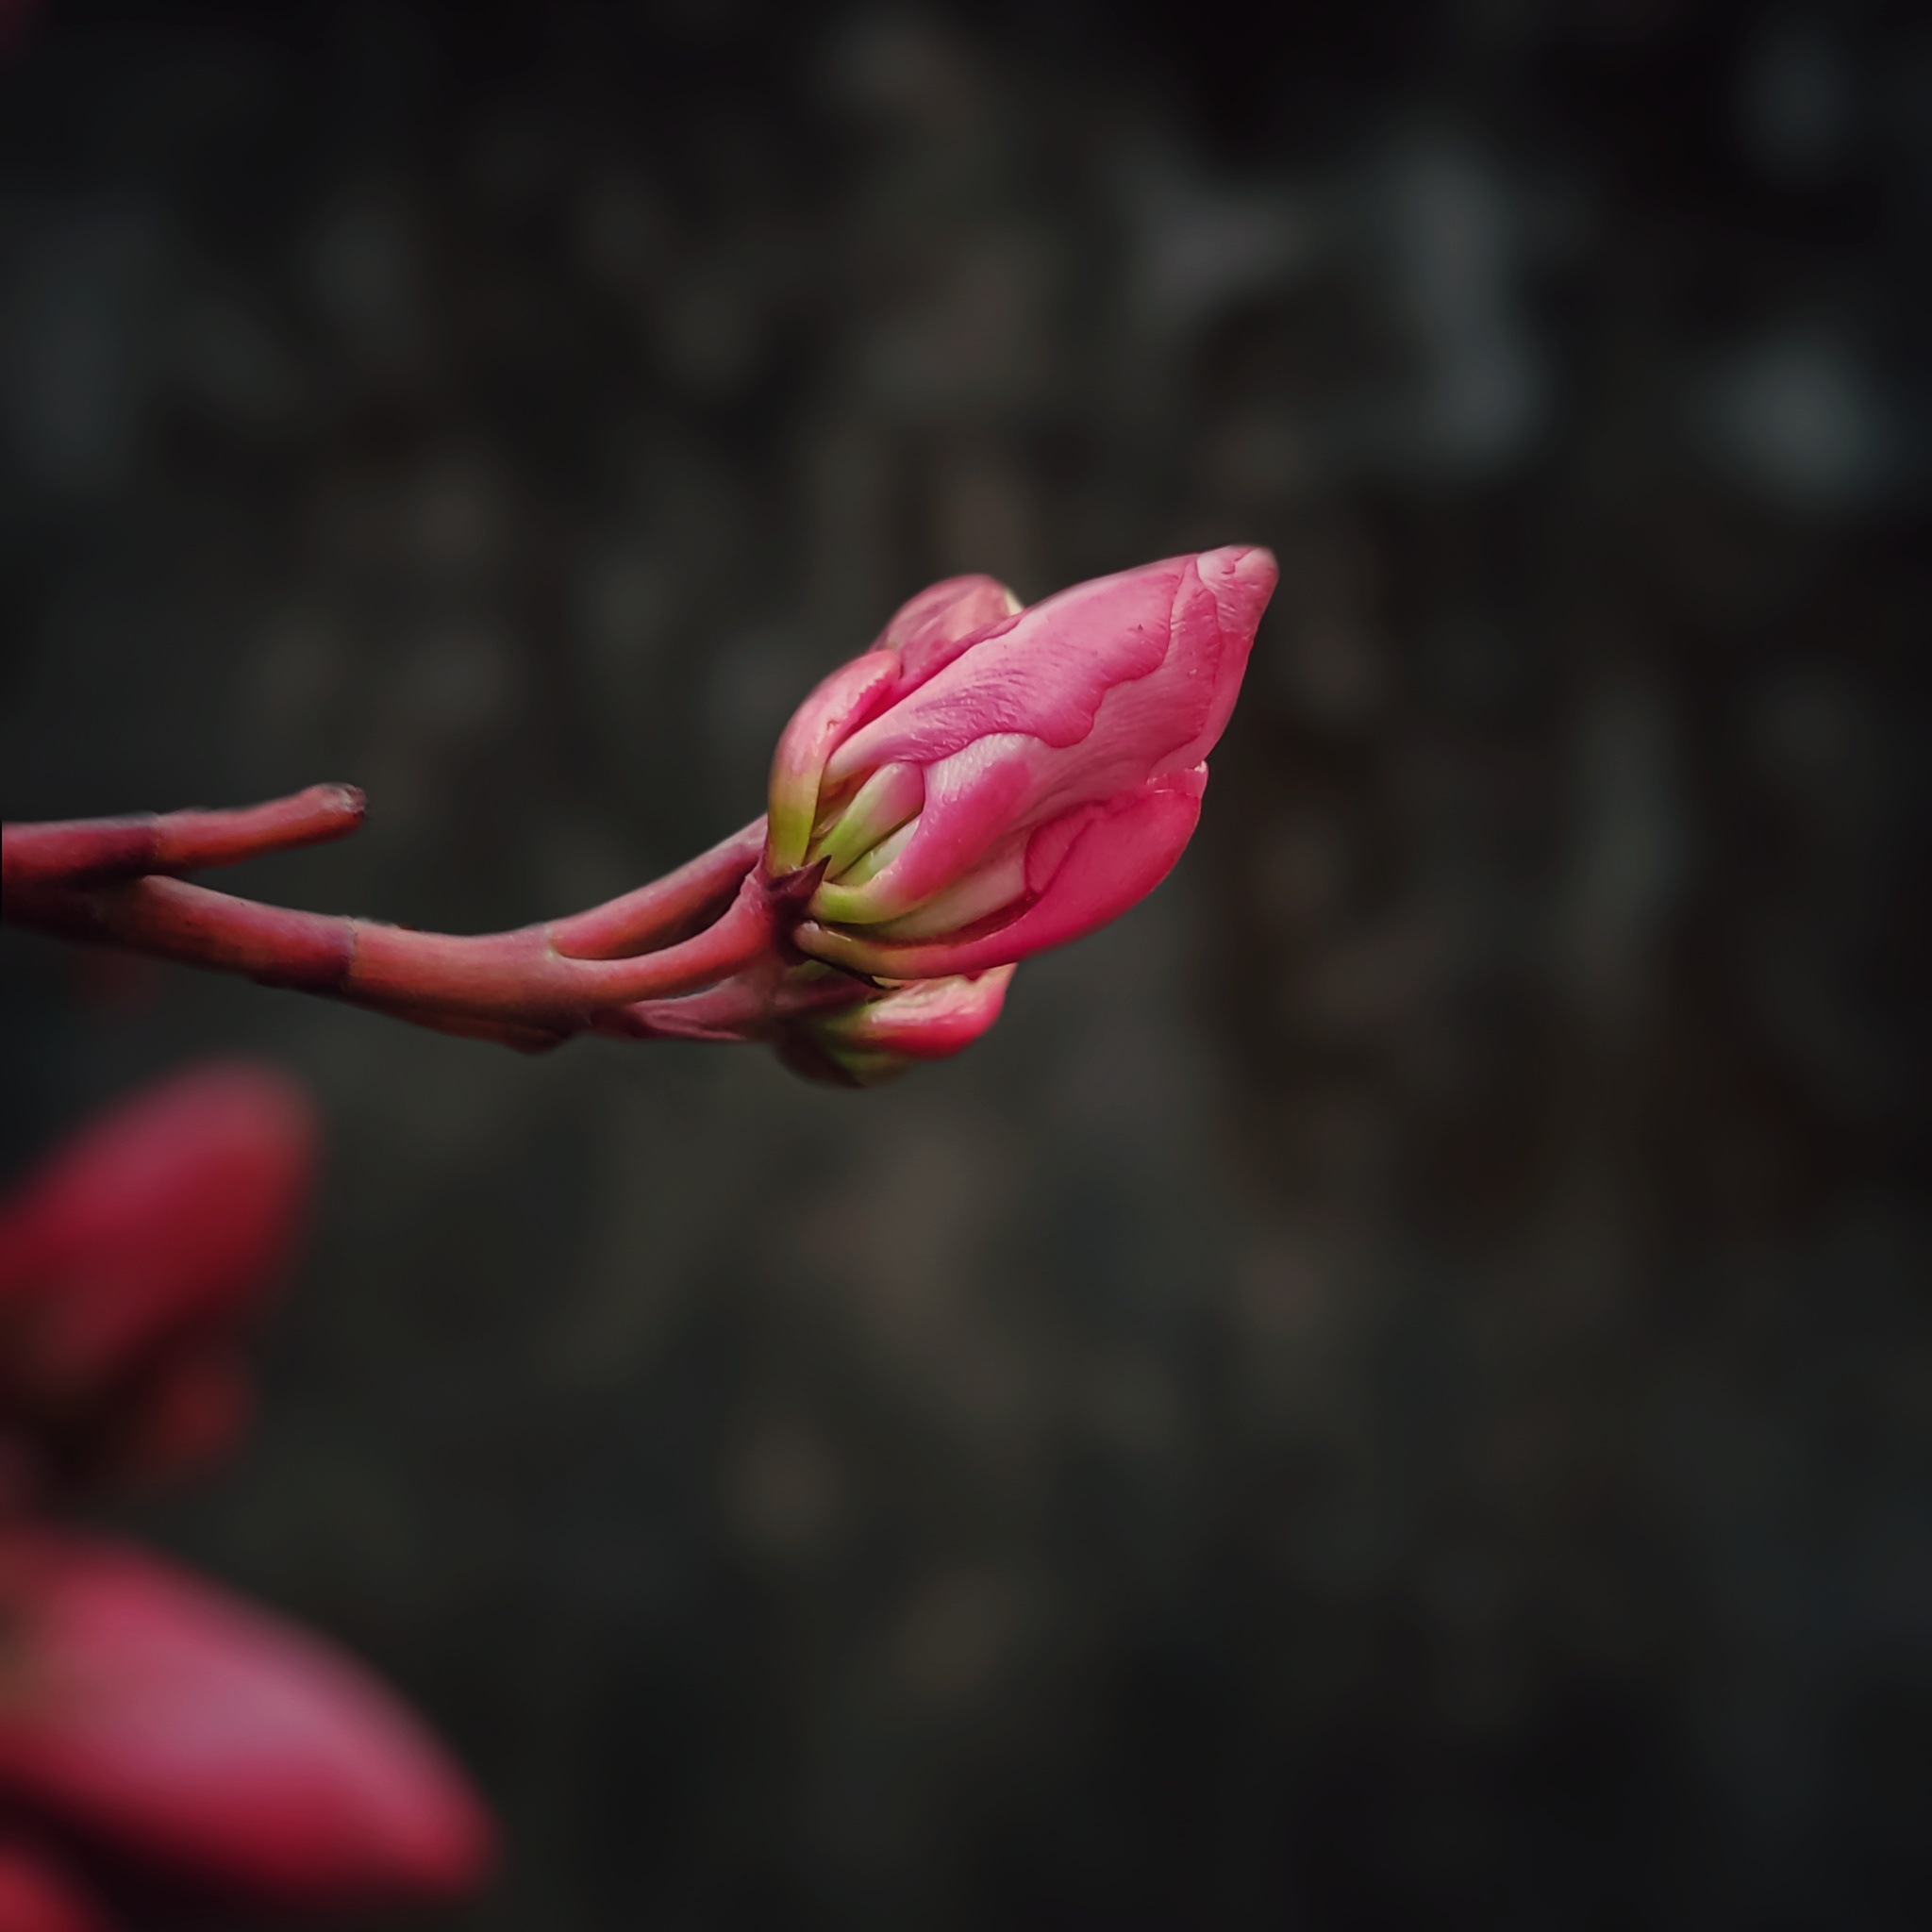 A pink flower bud